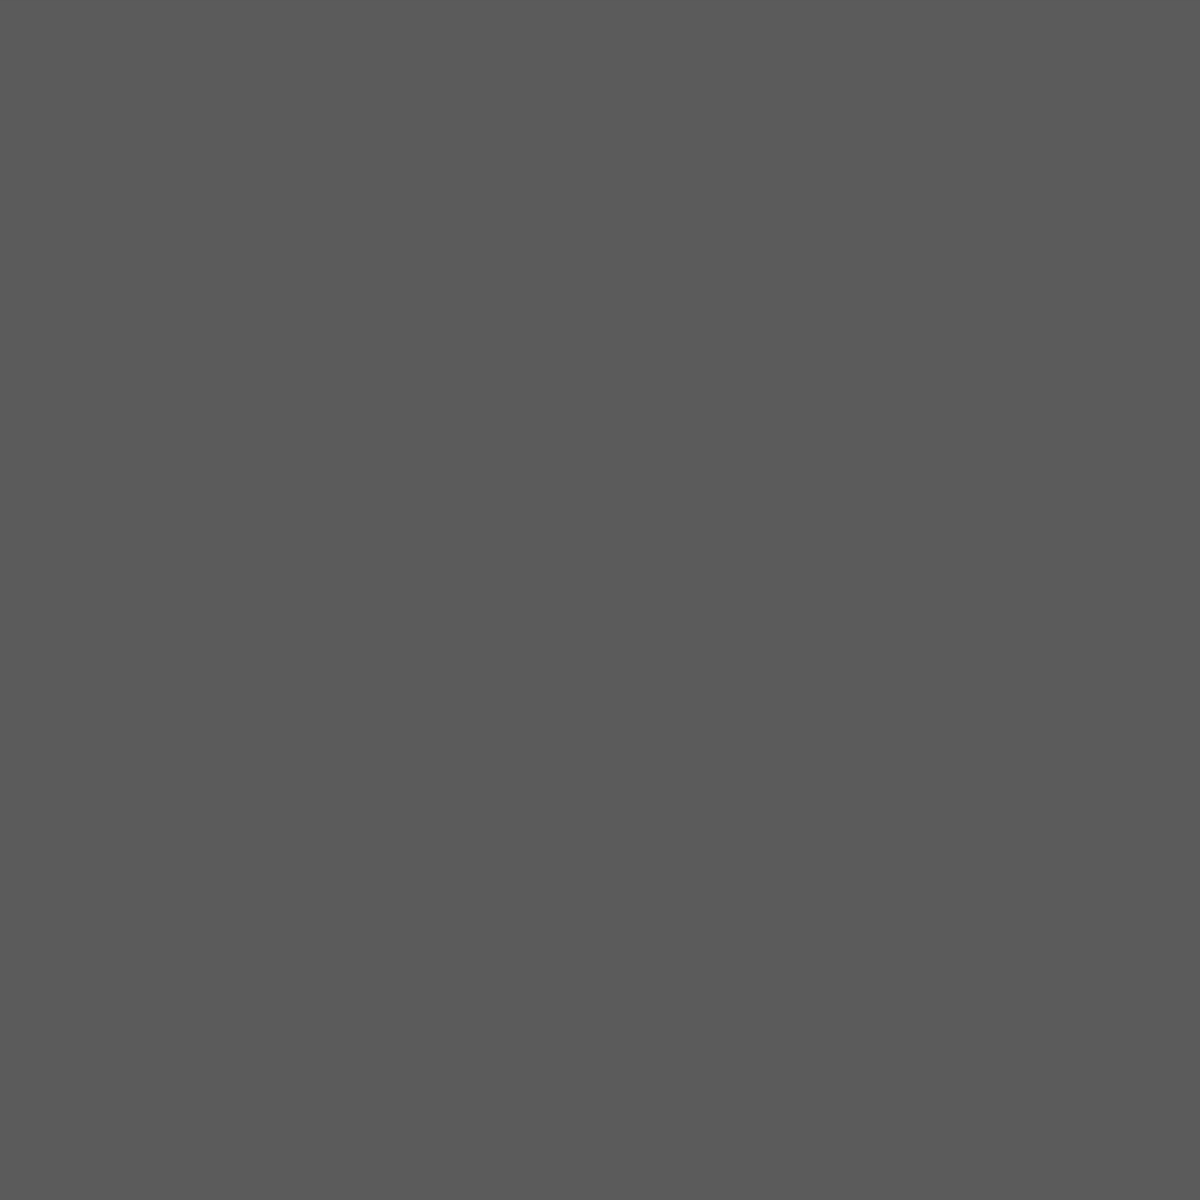 Swatch Sample of Signoria Gemma Beddingin Lead Grey Color